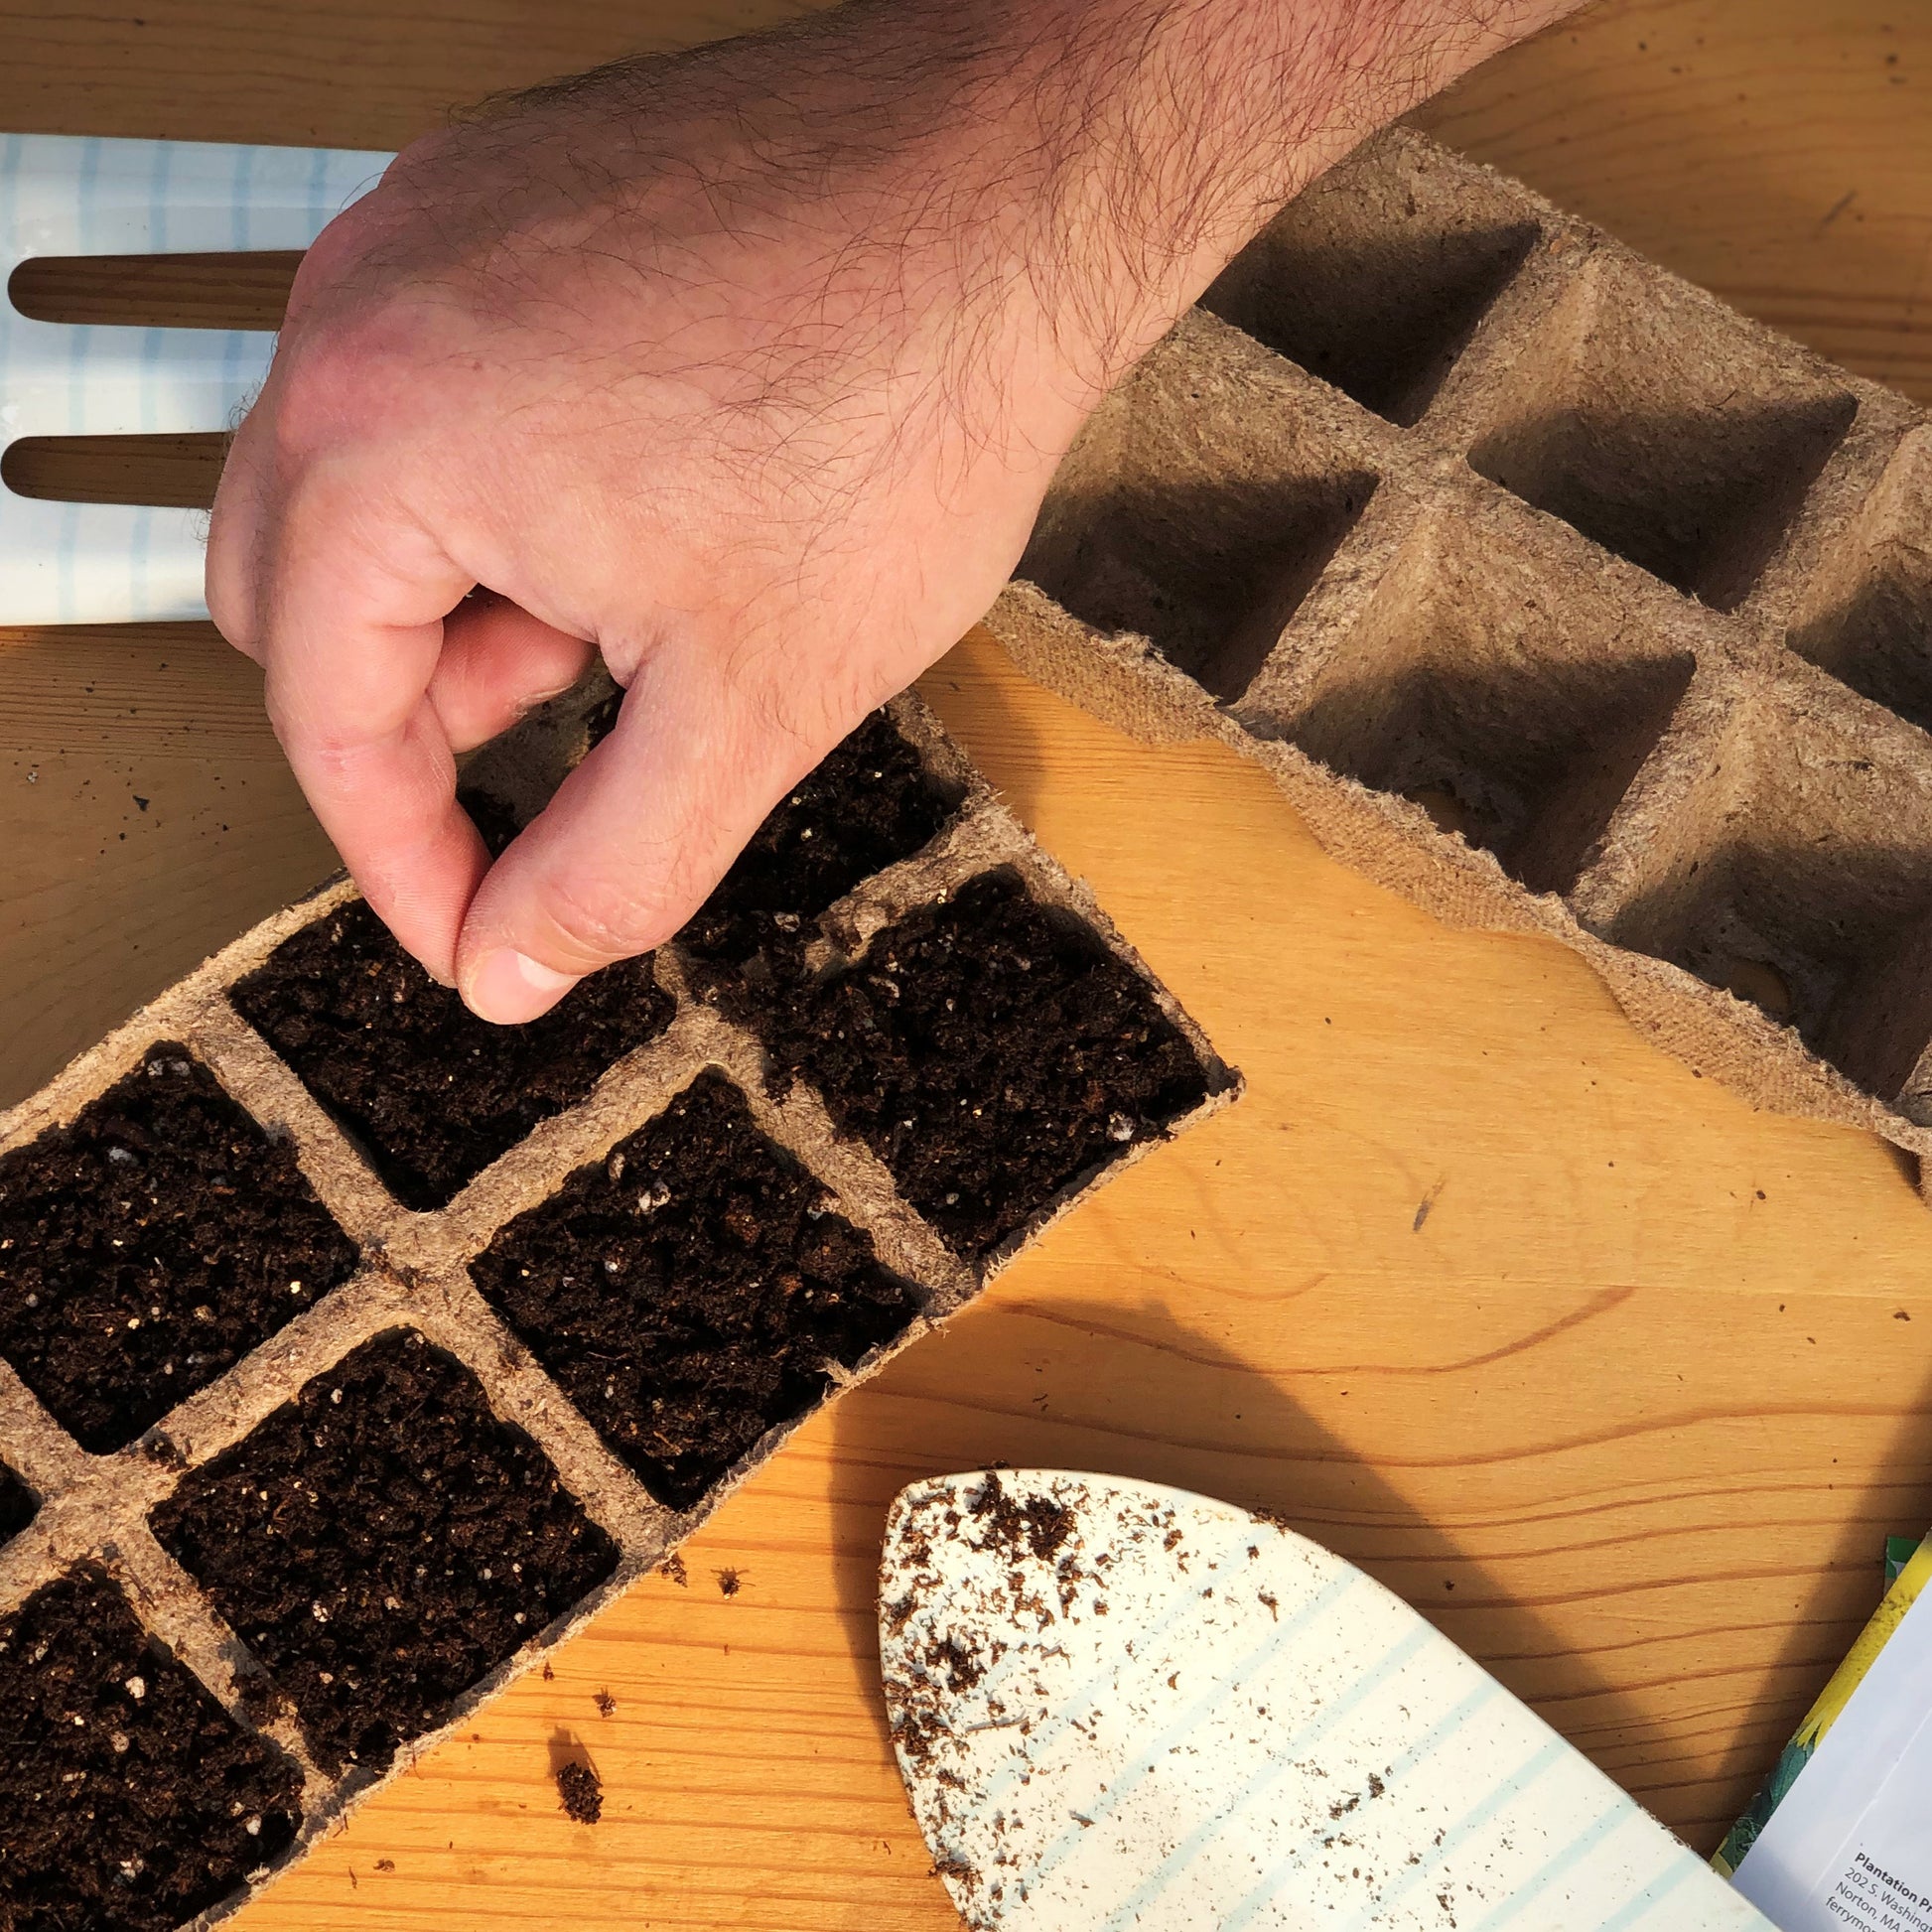 Start your Garden Leader Monster Bell Pepper seeds in Jiffy peat strips for easy transplanting when seedlings are ready.